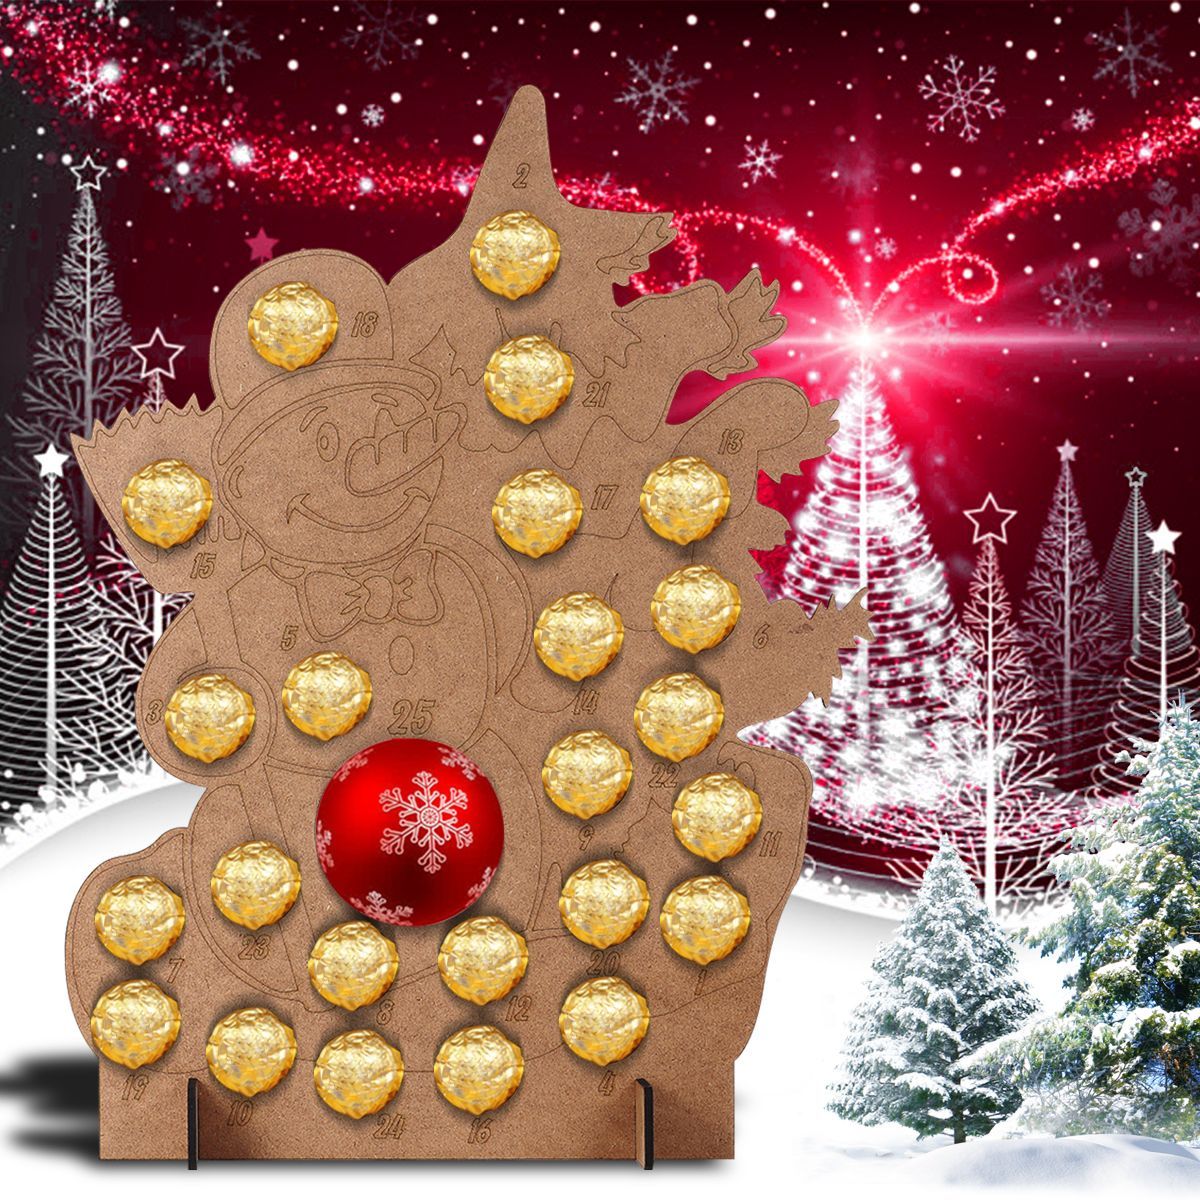 Wooden-Christmas-Advent-Calendar-Snowman-Chocolates-Orange-Storage-Box-Xmas-Gift-Decorations-1460359